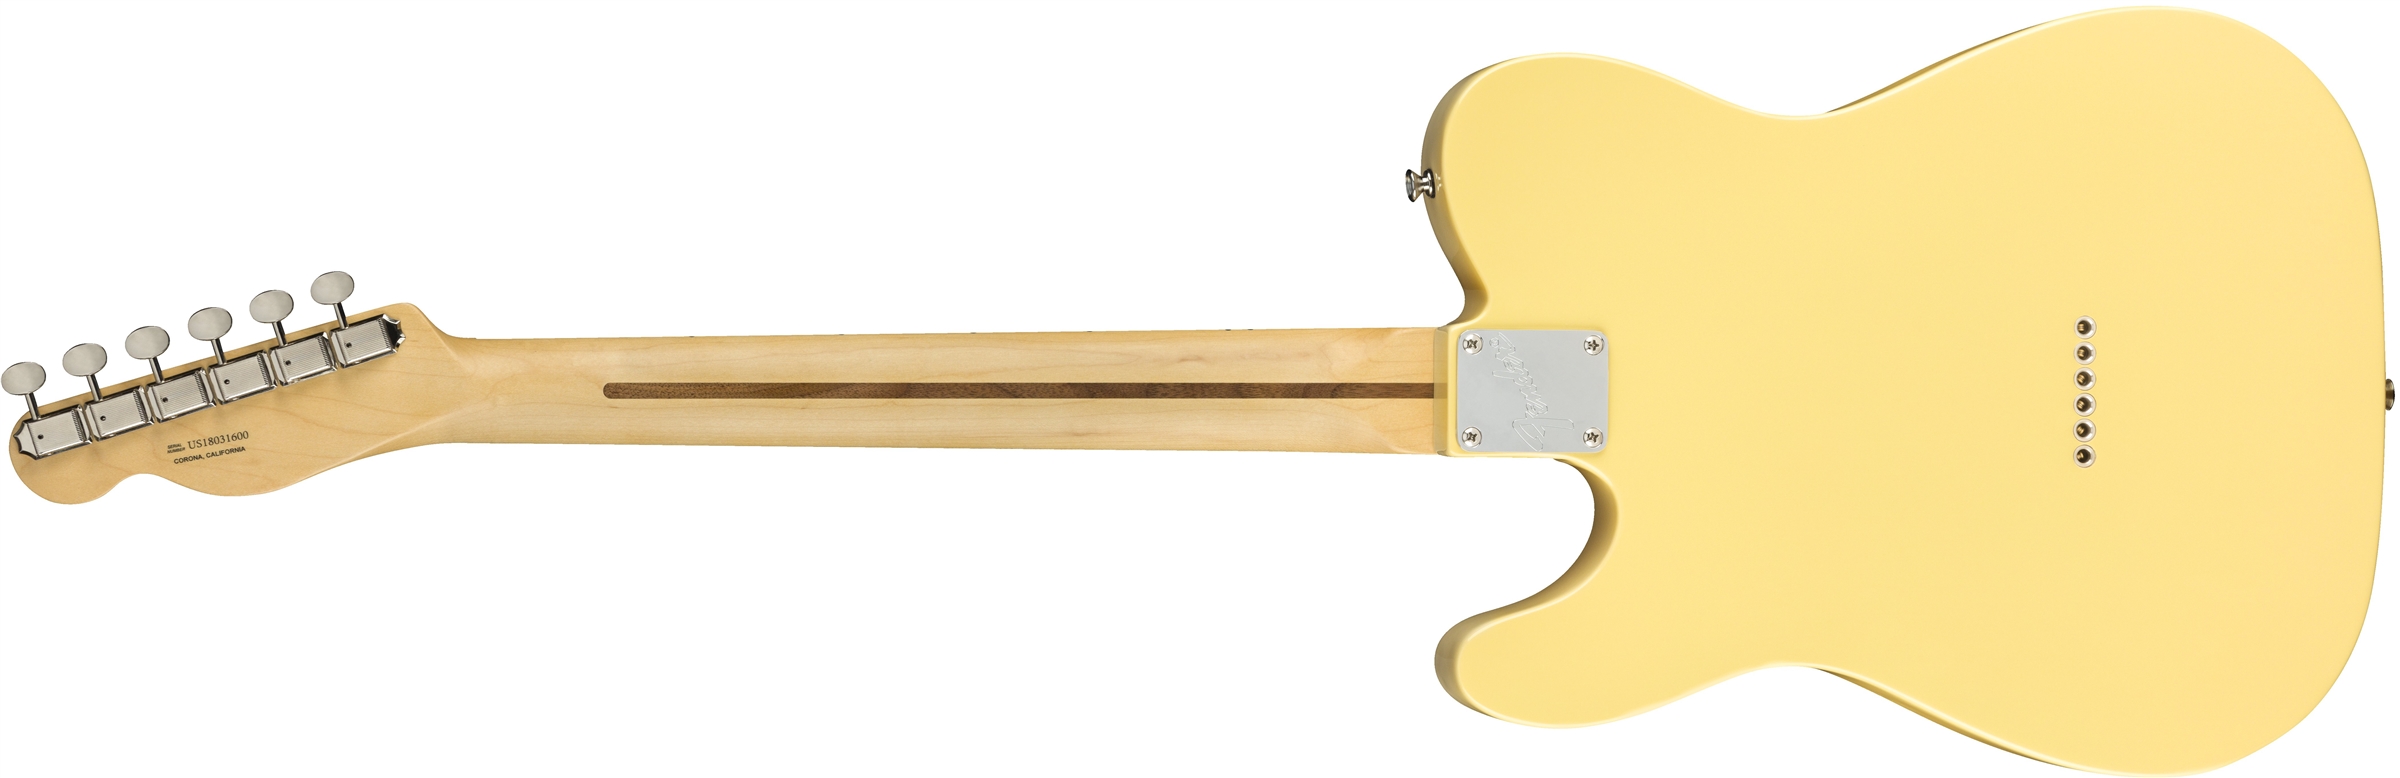 Fender Tele American Performer Usa Mn - Vintage White - Guitare Électrique Forme Tel - Variation 1